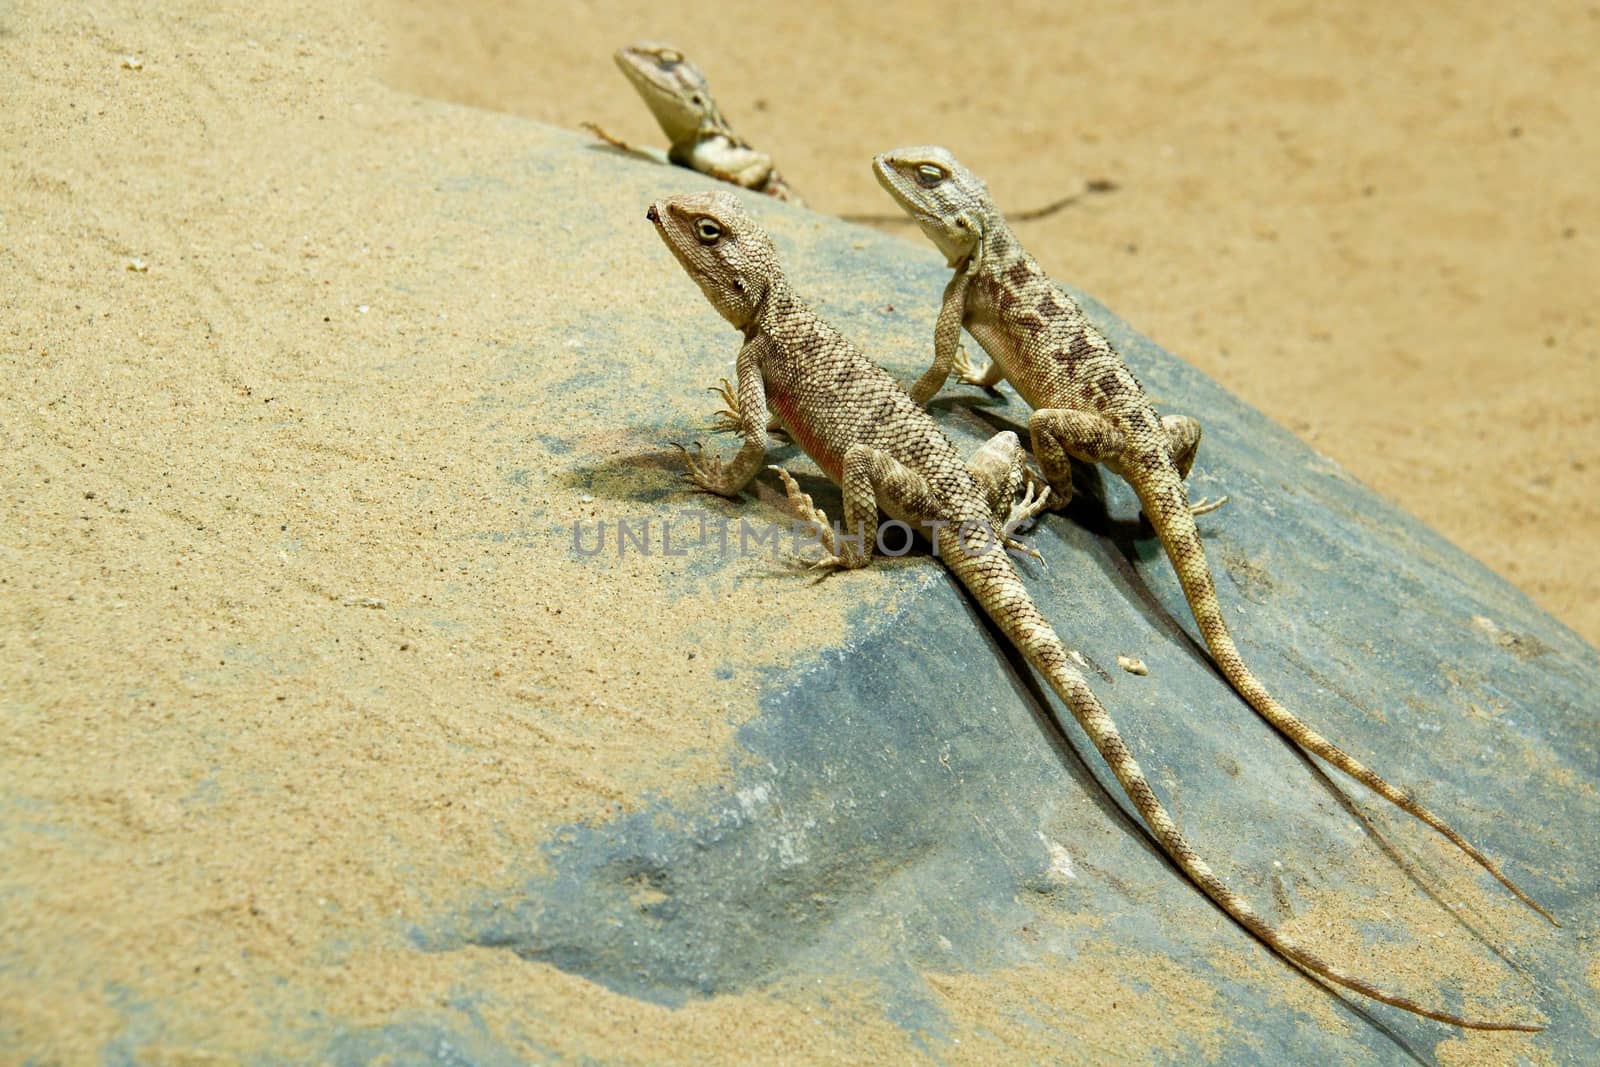 Wild lizard on the sand by Dermot68